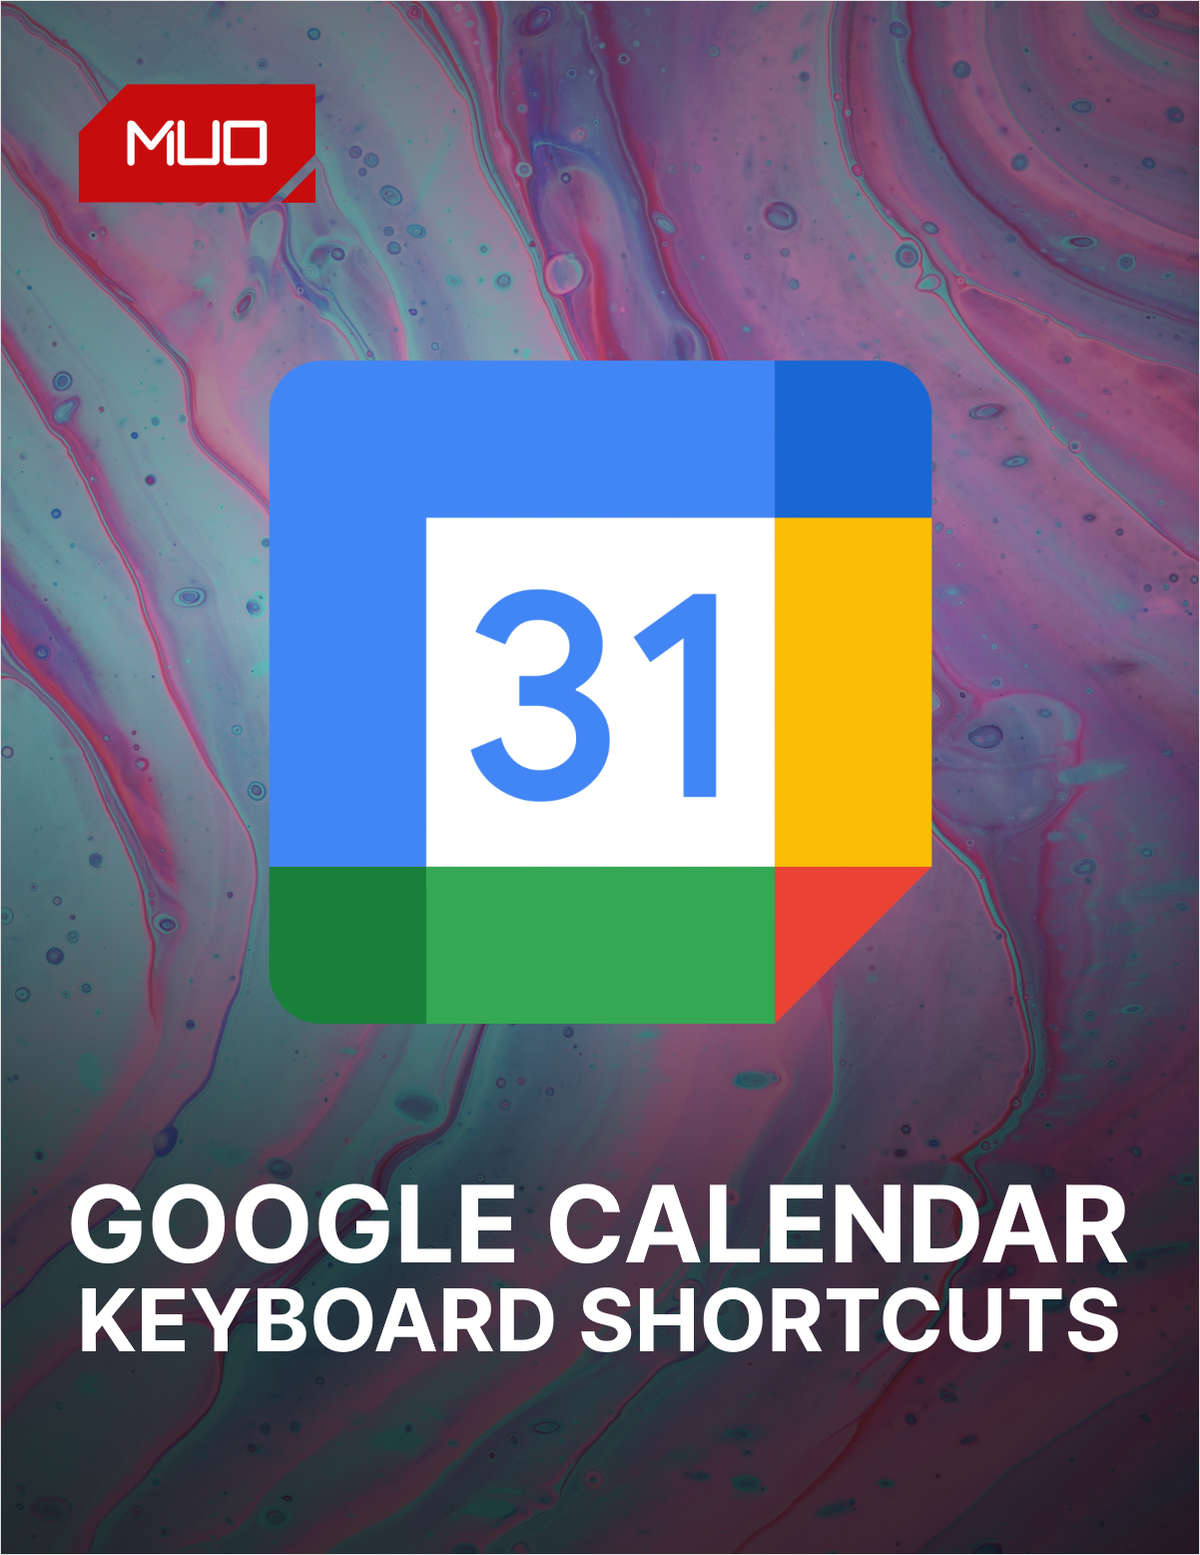 Google Calendar: Every Keyboard Shortcut You Need